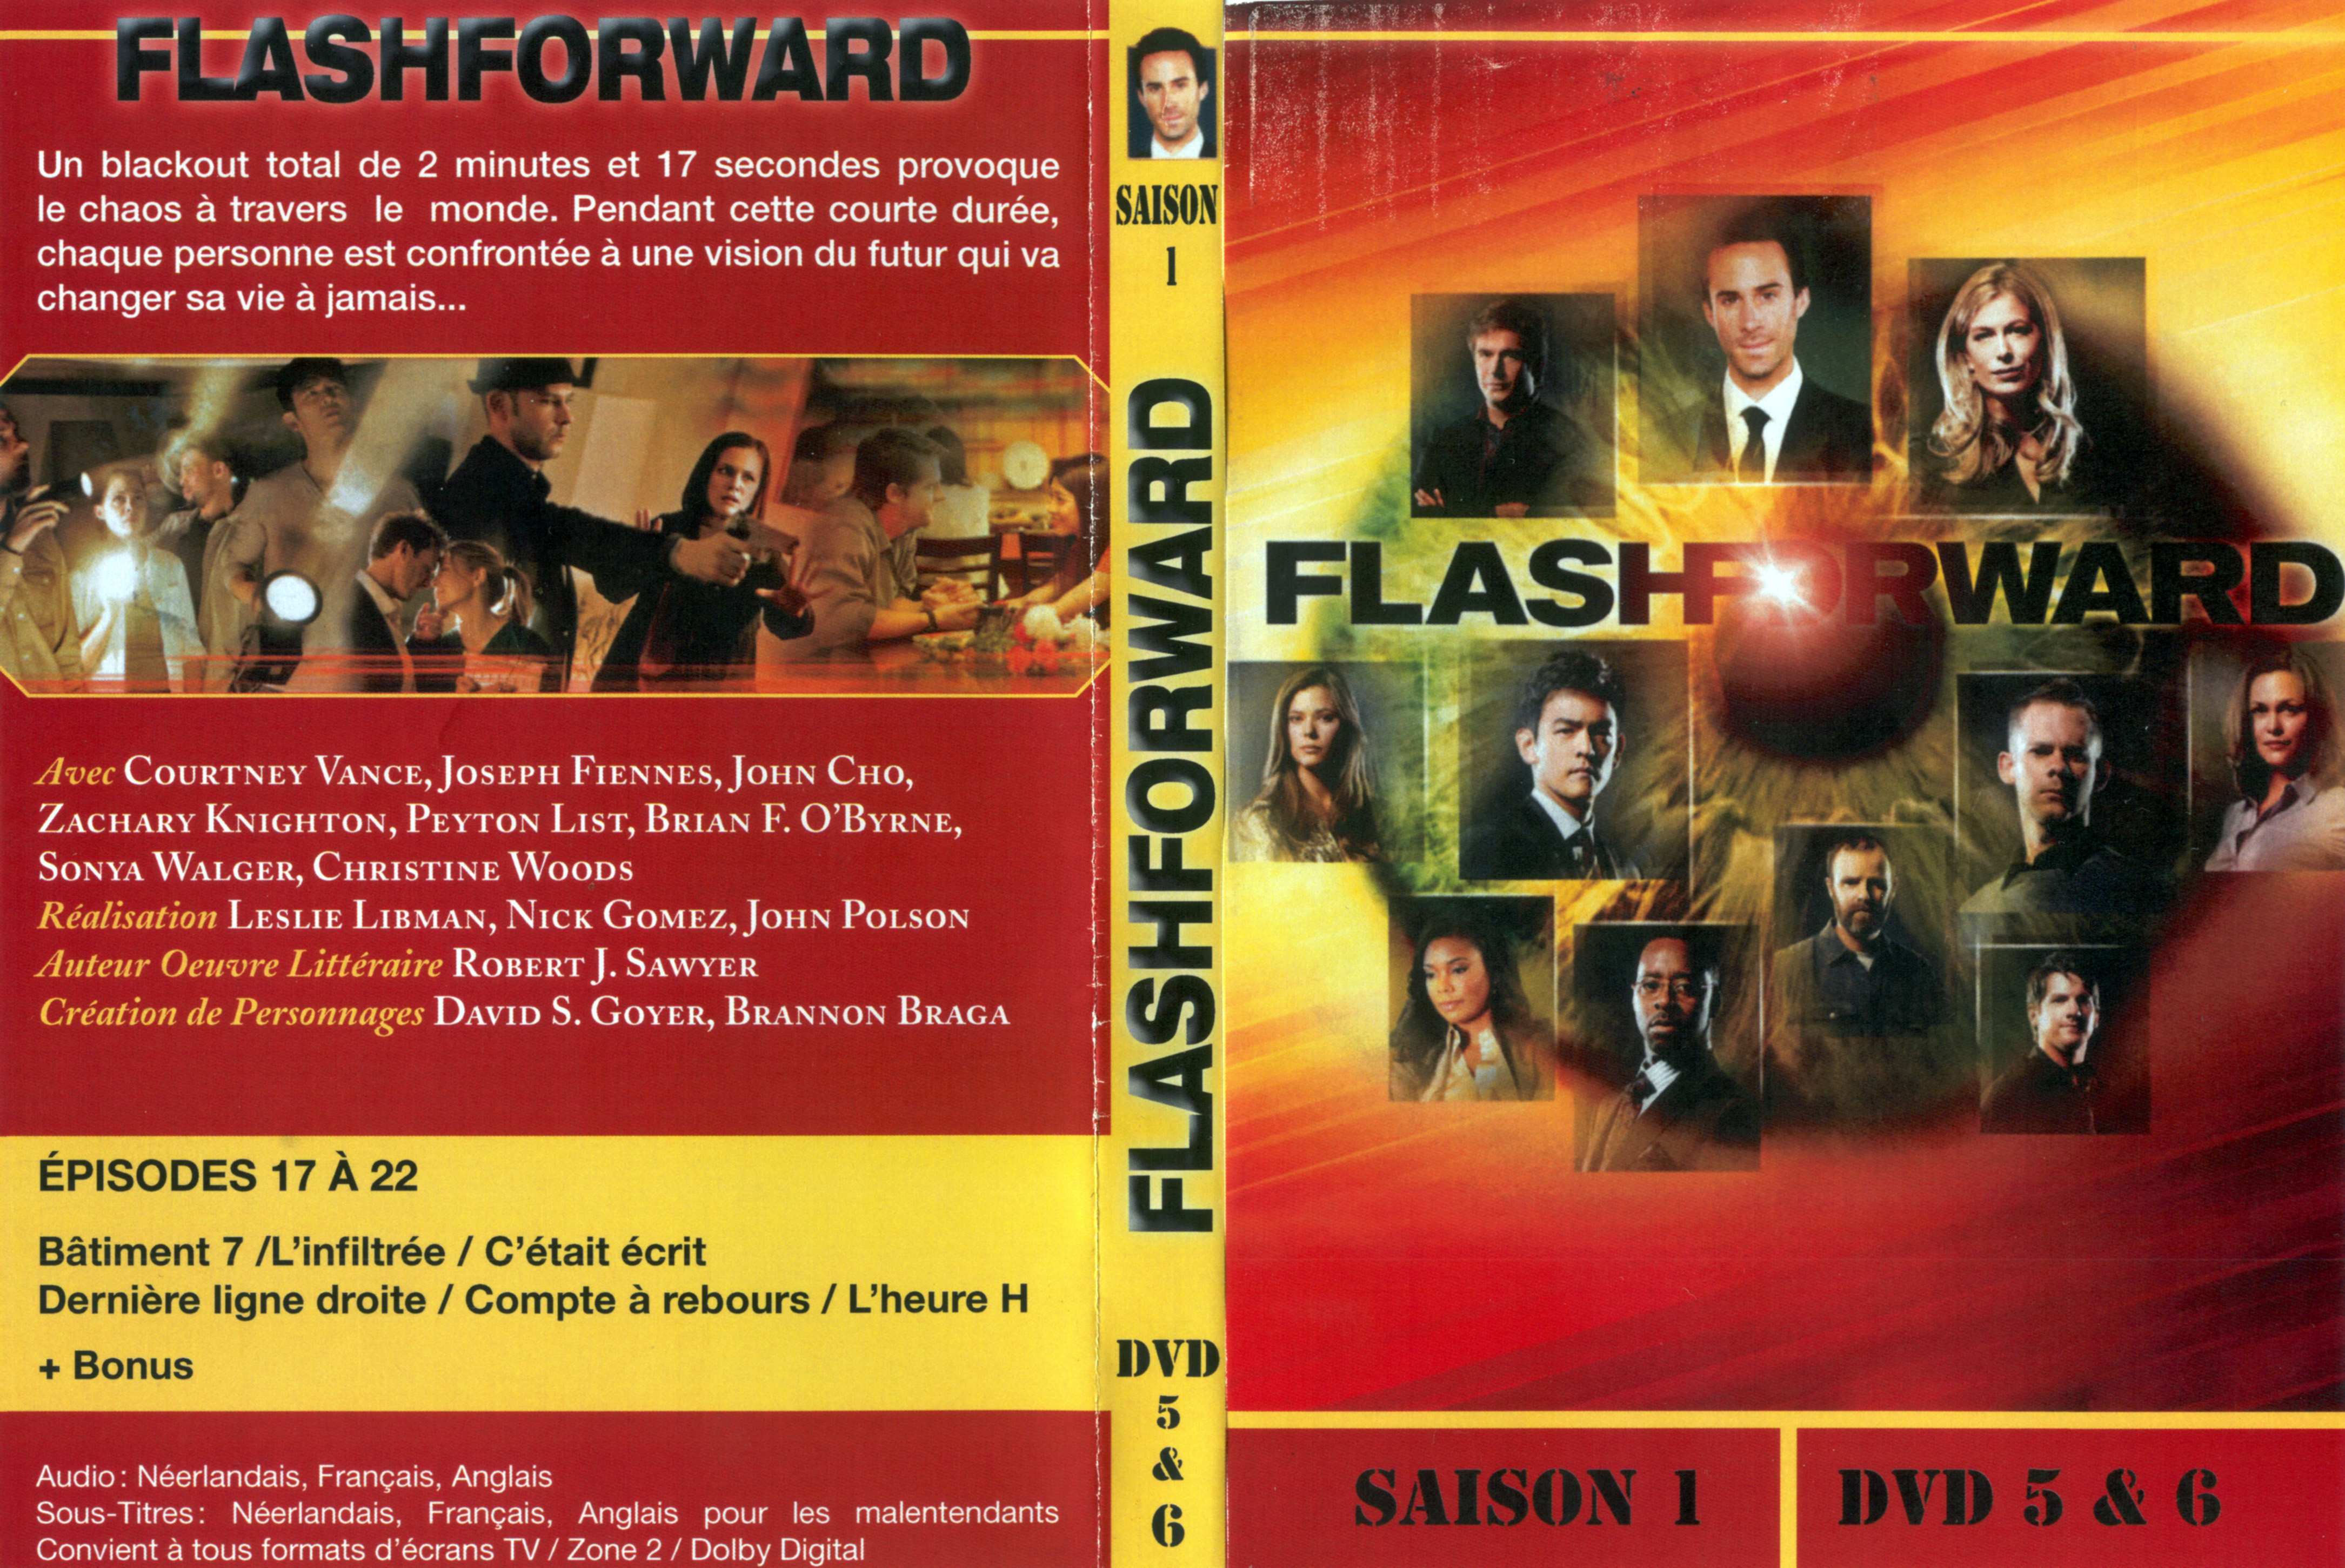 Jaquette DVD Flashforward Saison 1 DVD 3